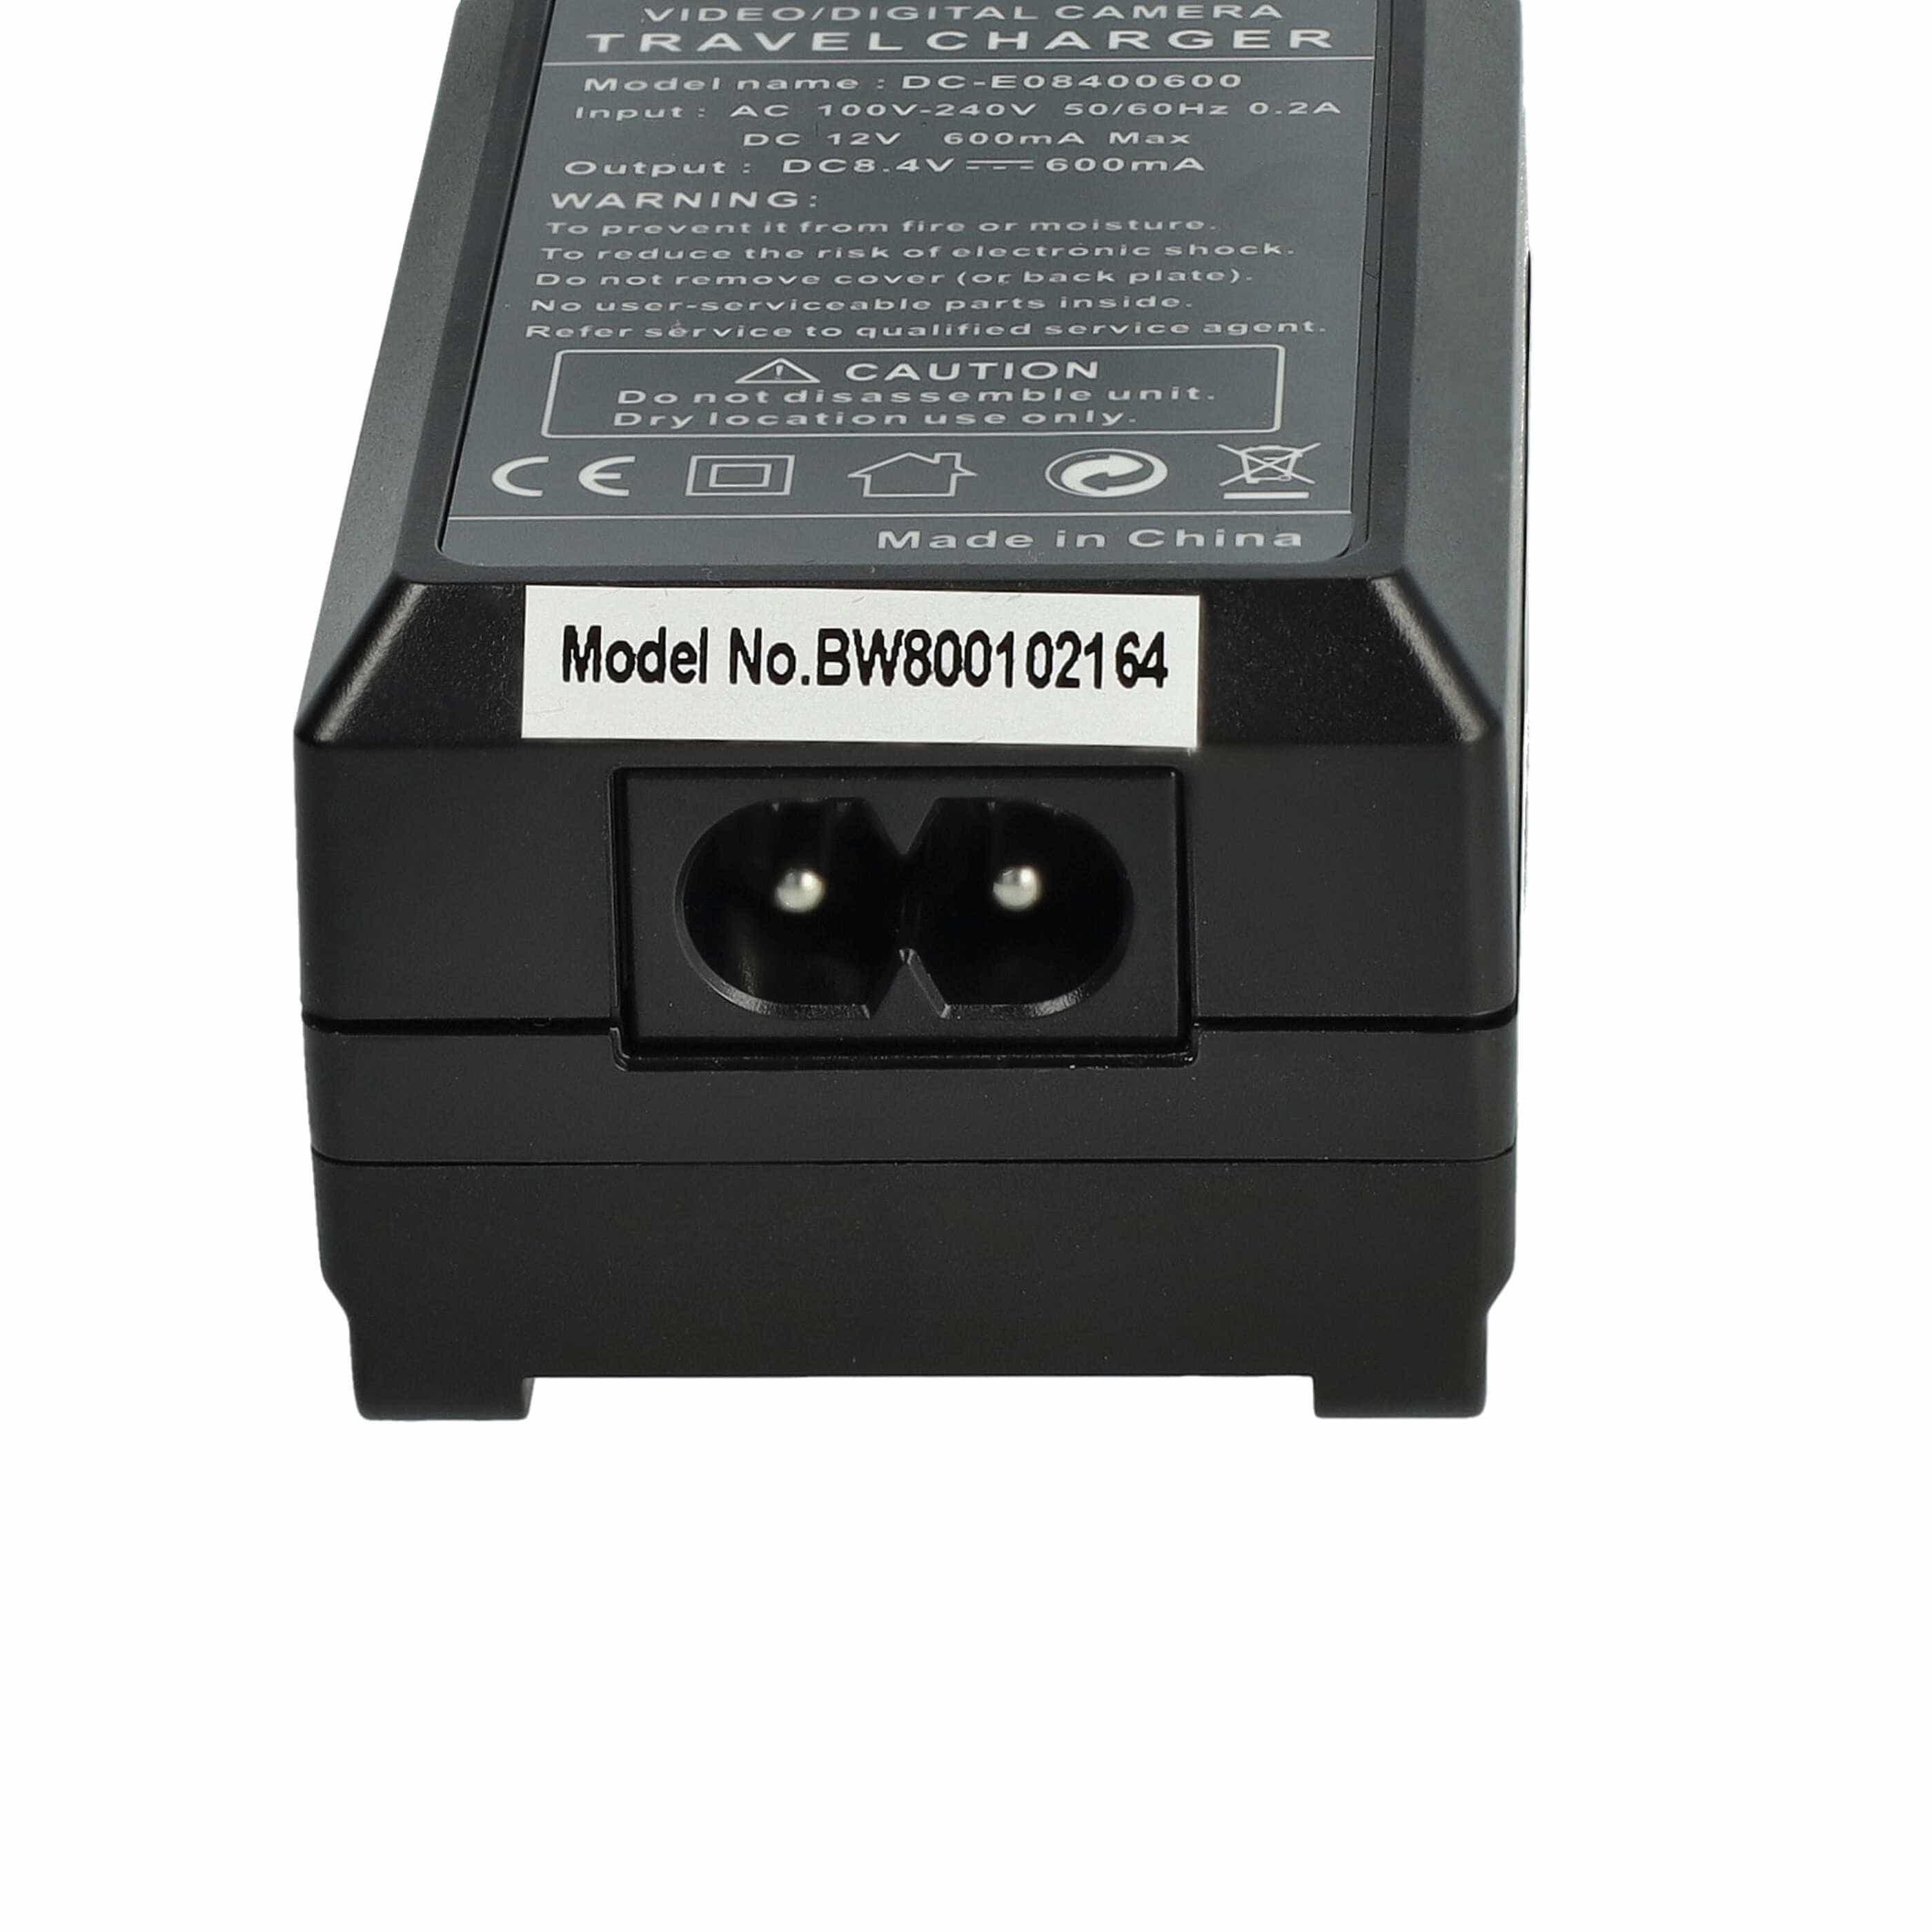 Ładowarka do aparatu V-Lux DMC-FZ100 i innych - ładowarka akumulatora 0,6 A, 8,4 V